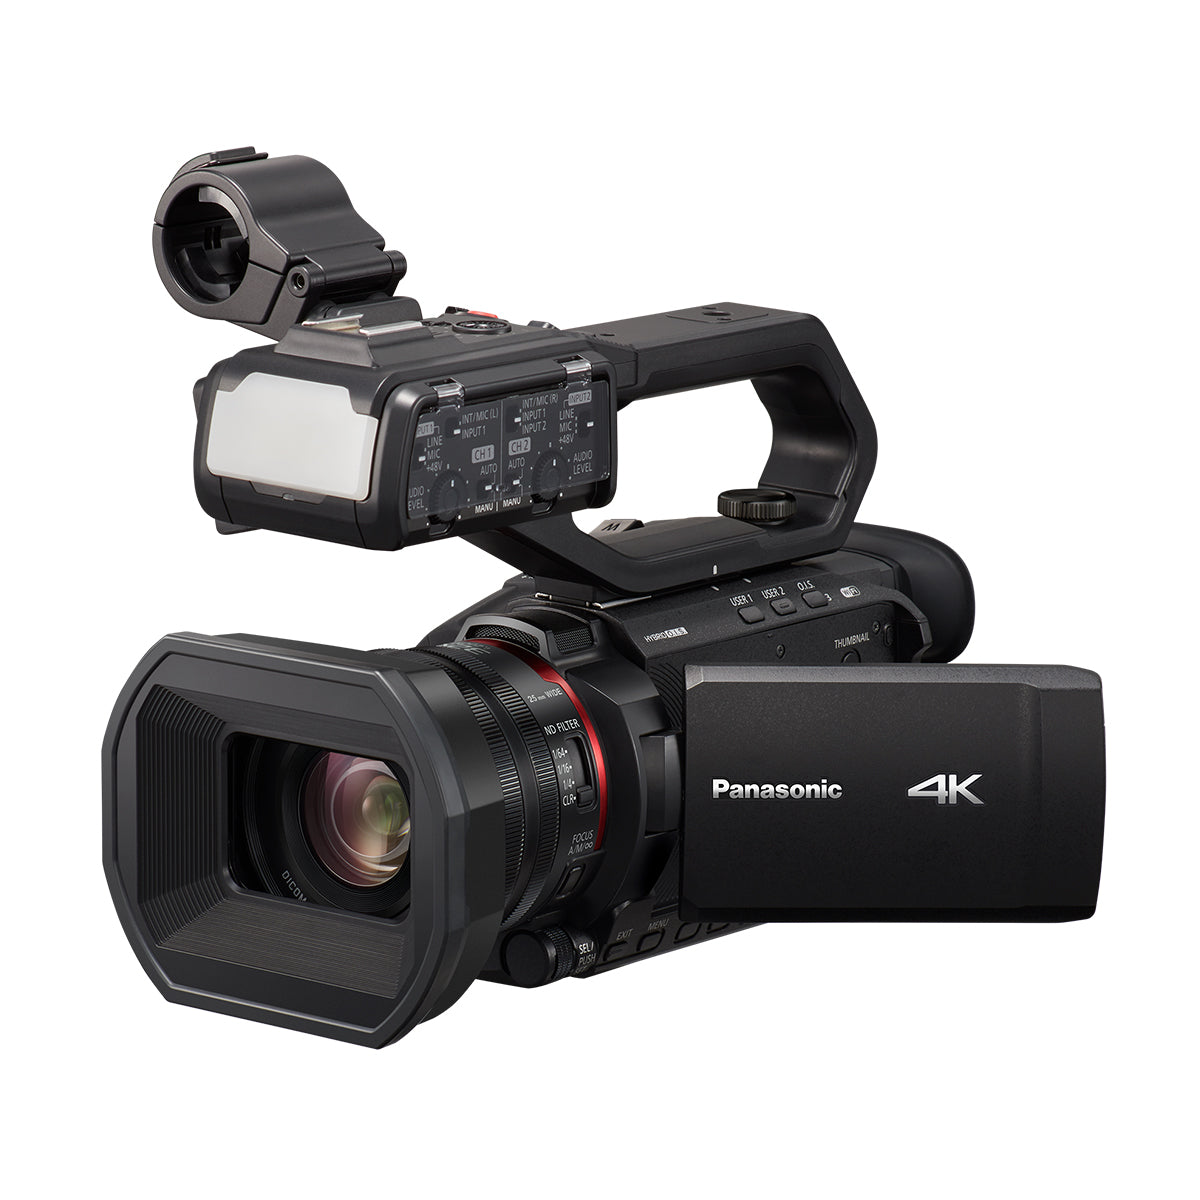 Panasonic HC-X2000 UHD 4K 3G-SDI/HDMI Pro Camcorder with 24x Zoom